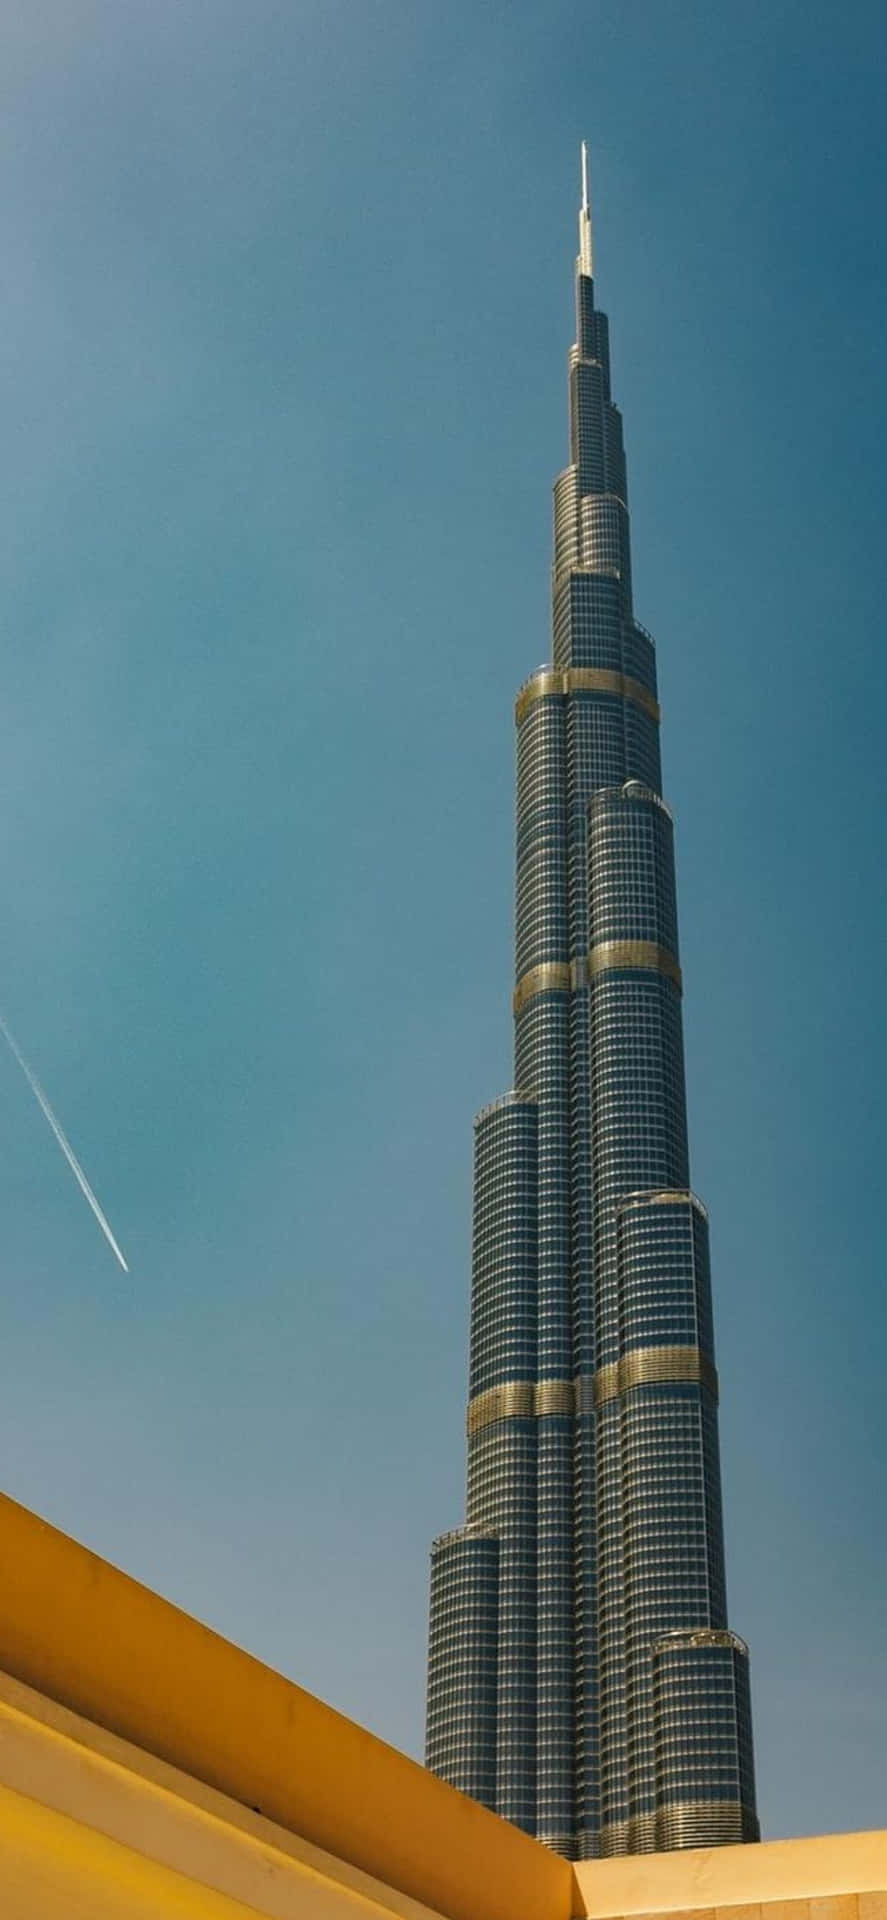 Burj Khalifa Cool Background Coloring Page | Cool backgrounds, Coloring  pages, Burj khalifa